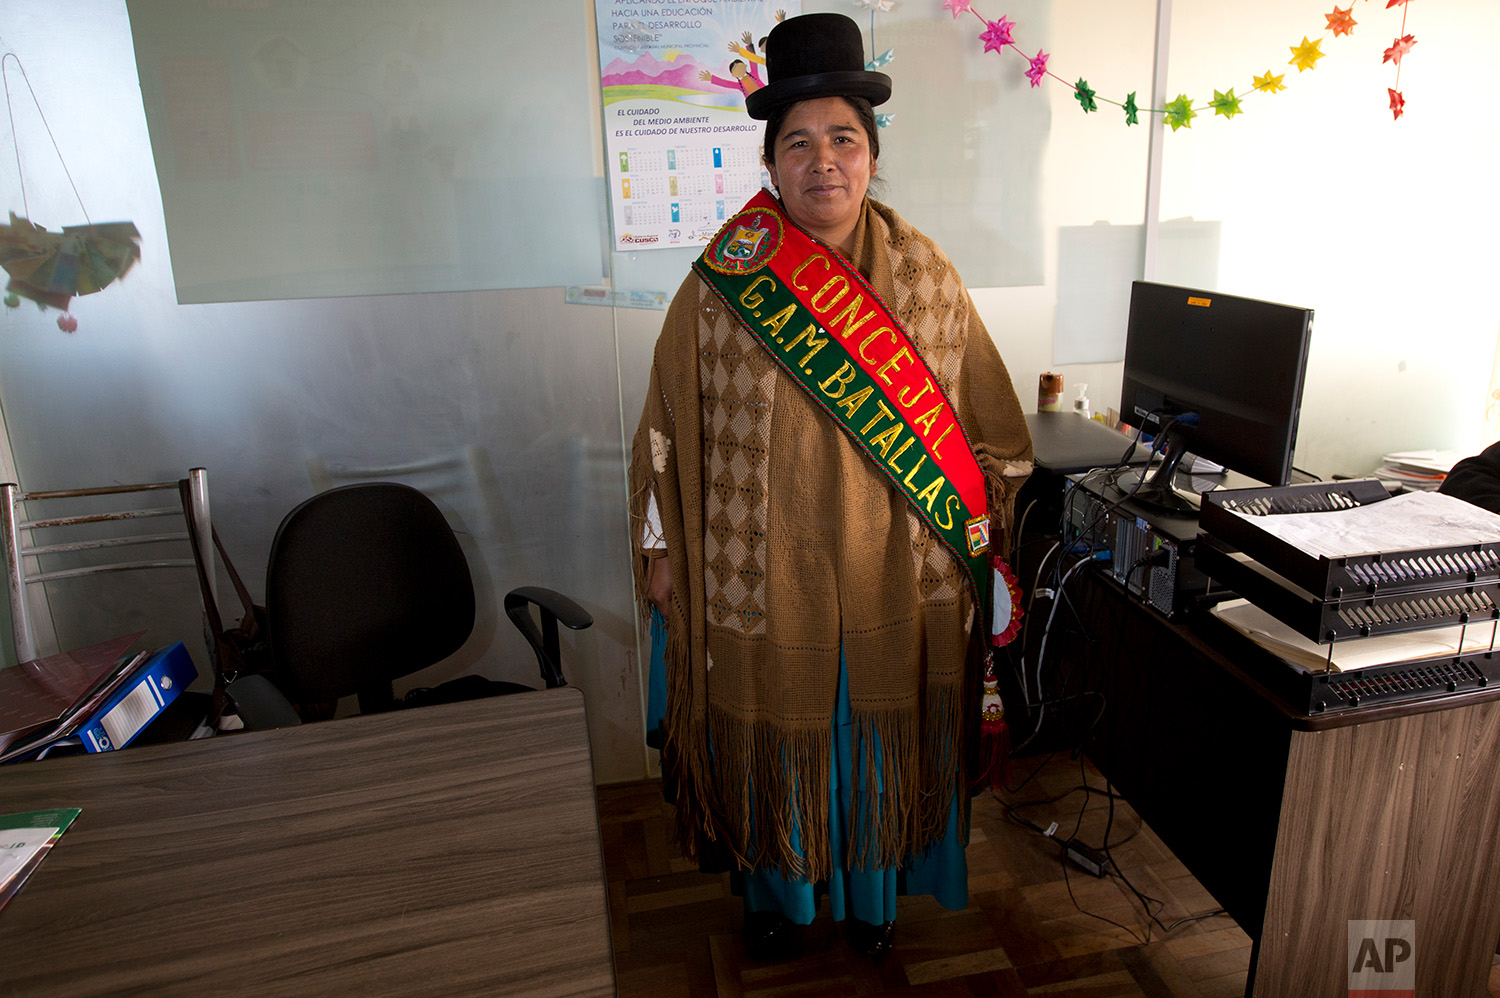  In this July 25, 2018 photo, Batallas Councilwoman Lidia Maria Quispe, poses for photo wearing her official sash, in Batallas, Bolivia. (AP Photo/Juan Karita) 